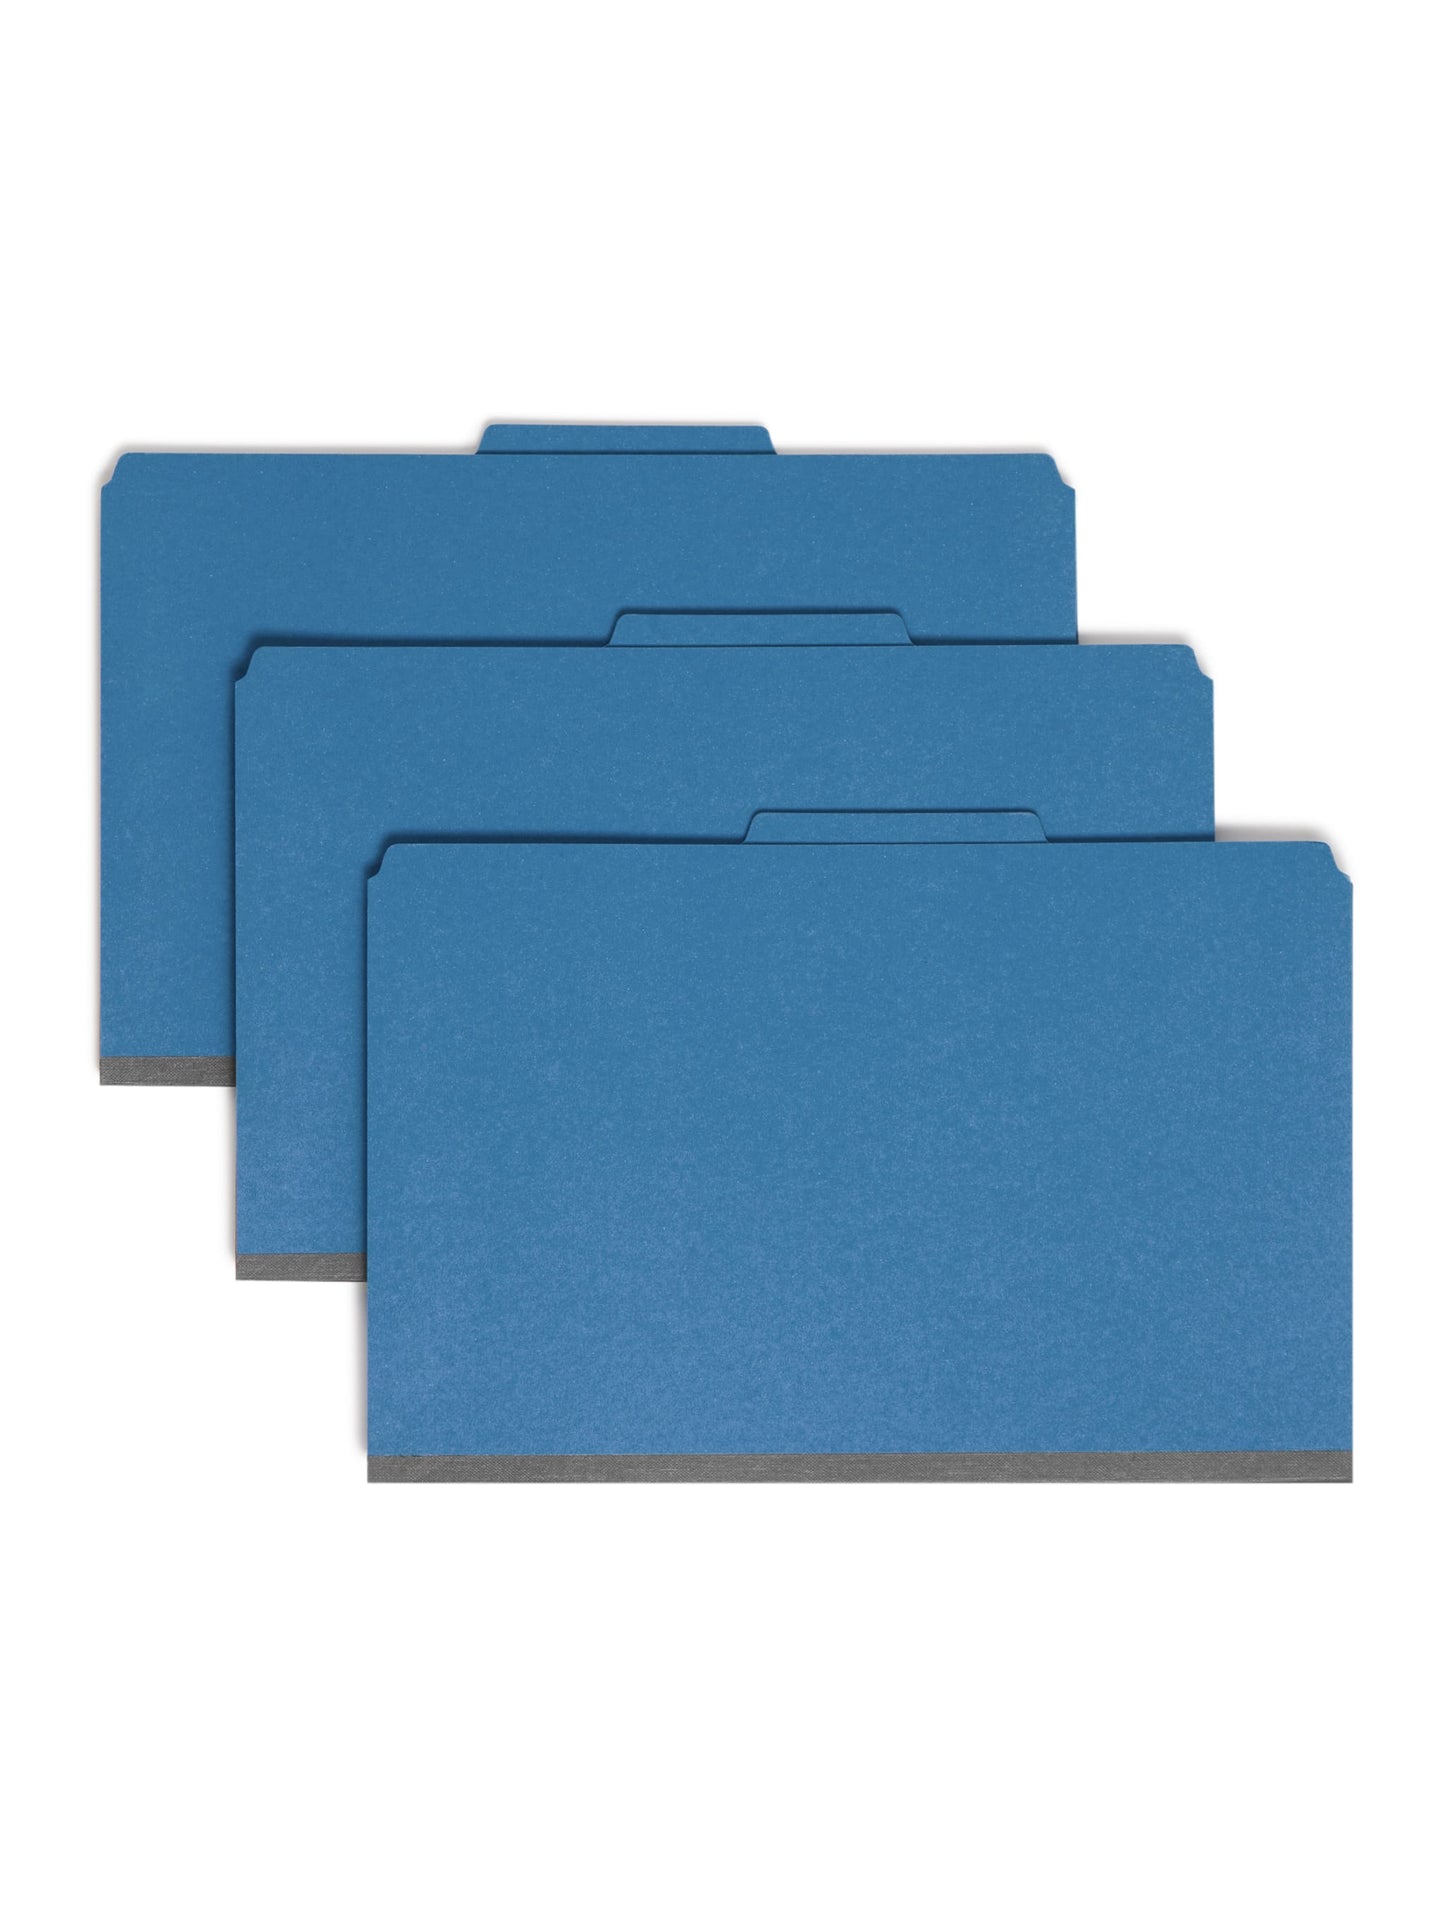 SafeSHIELD® Pressboard Classification File Folders, 2 Dividers, 2 inch Expansion, 2/5-Cut Tab, Dark Blue Color, Legal Size, Set of 0, 30086486190351